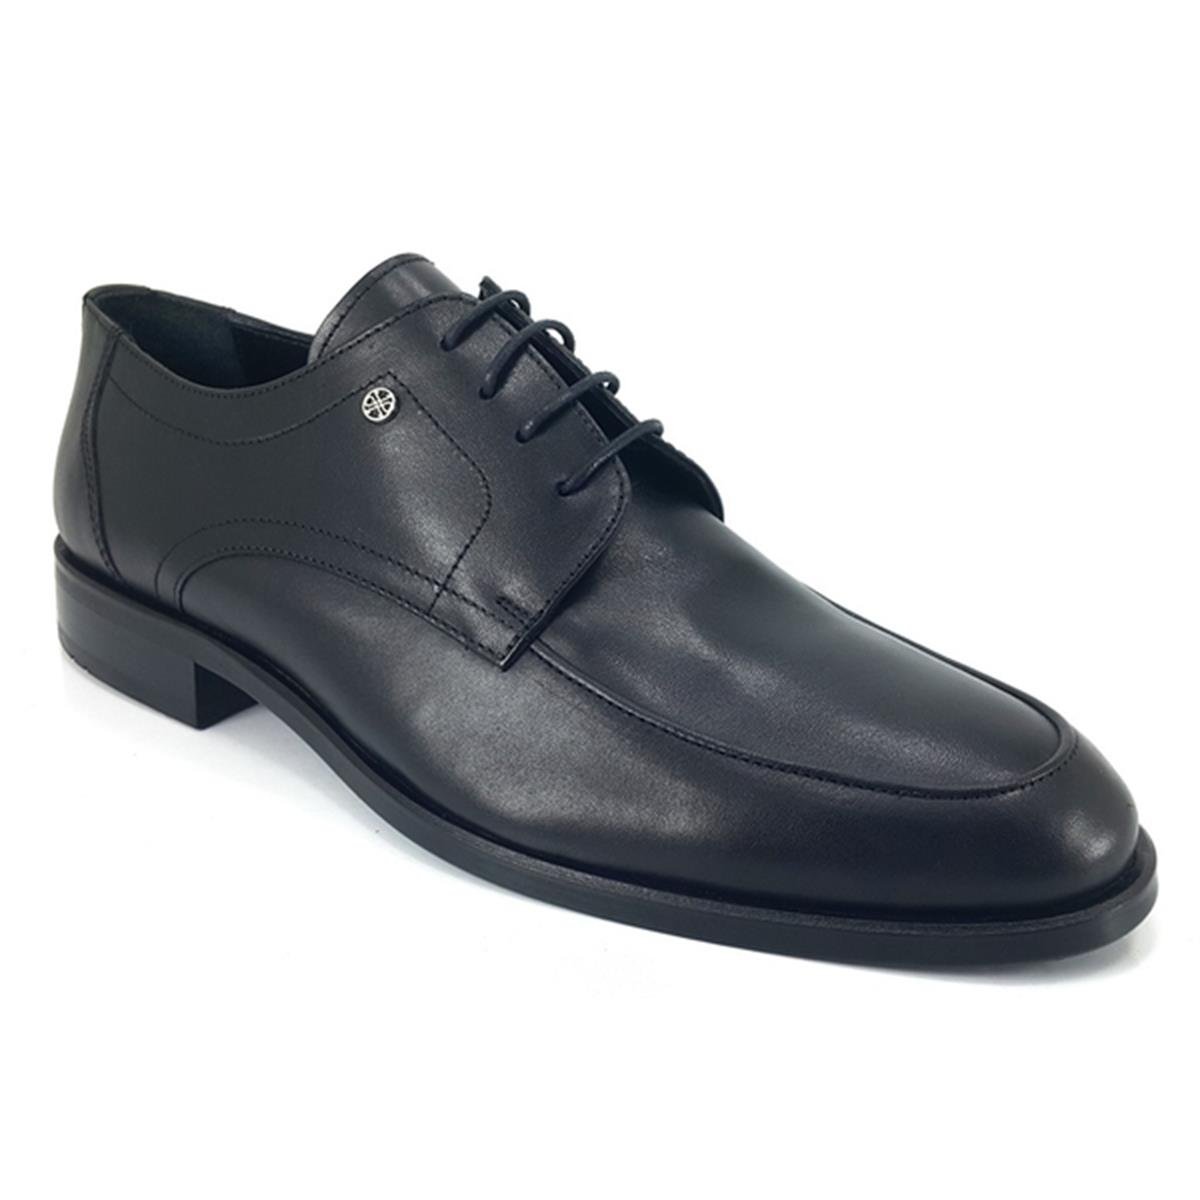 Marcomen 9445 22YA Klasik Erkek Ayakkabı Siyah - nehironline.com